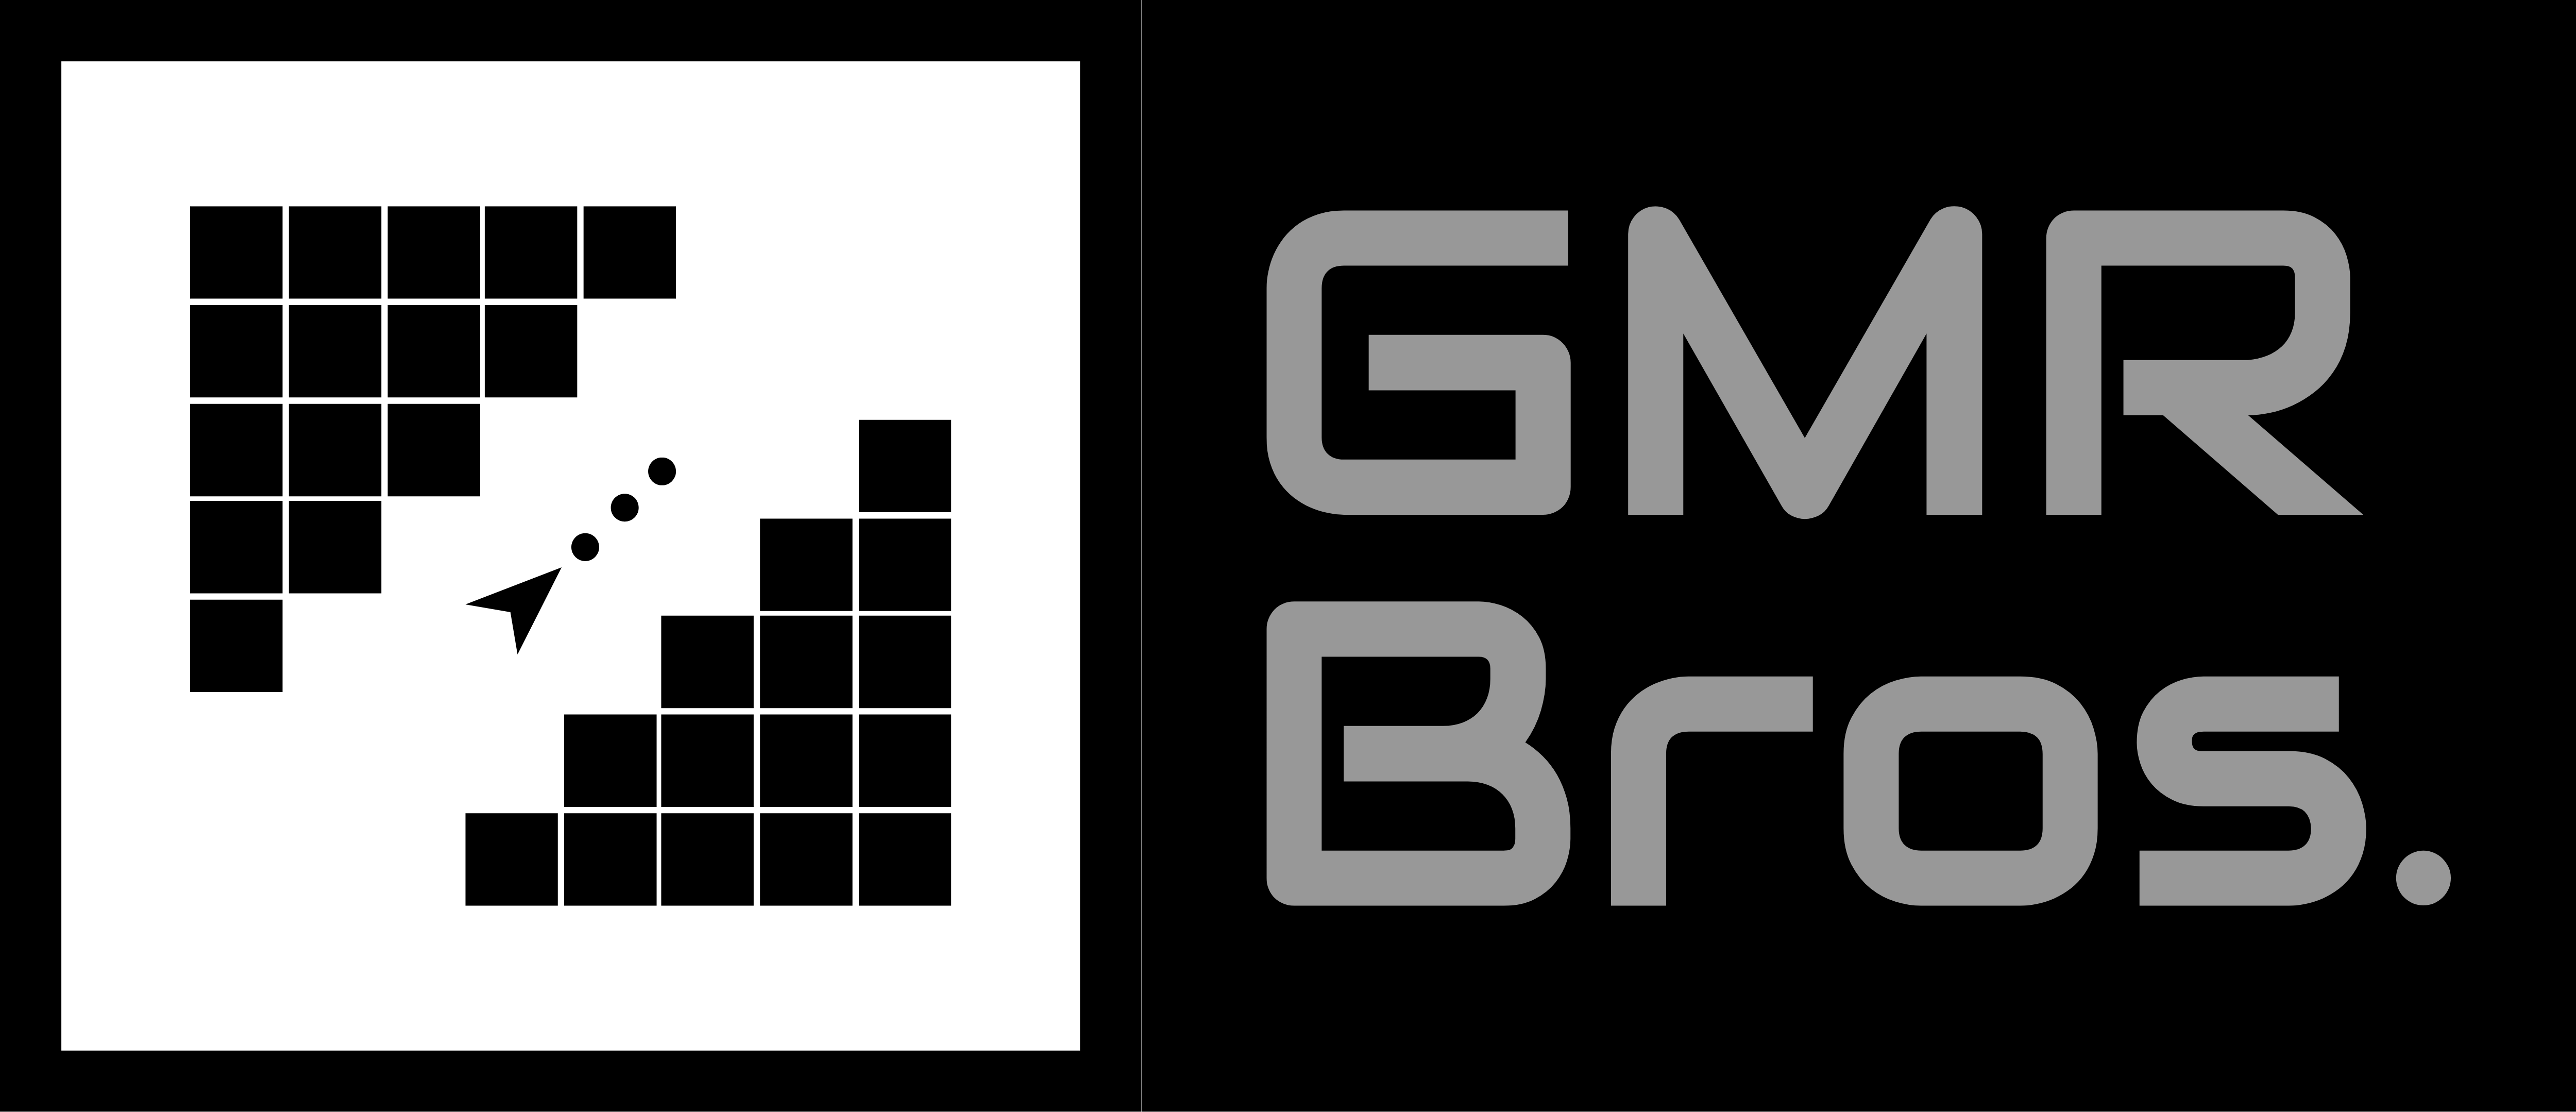 GMR Bros.